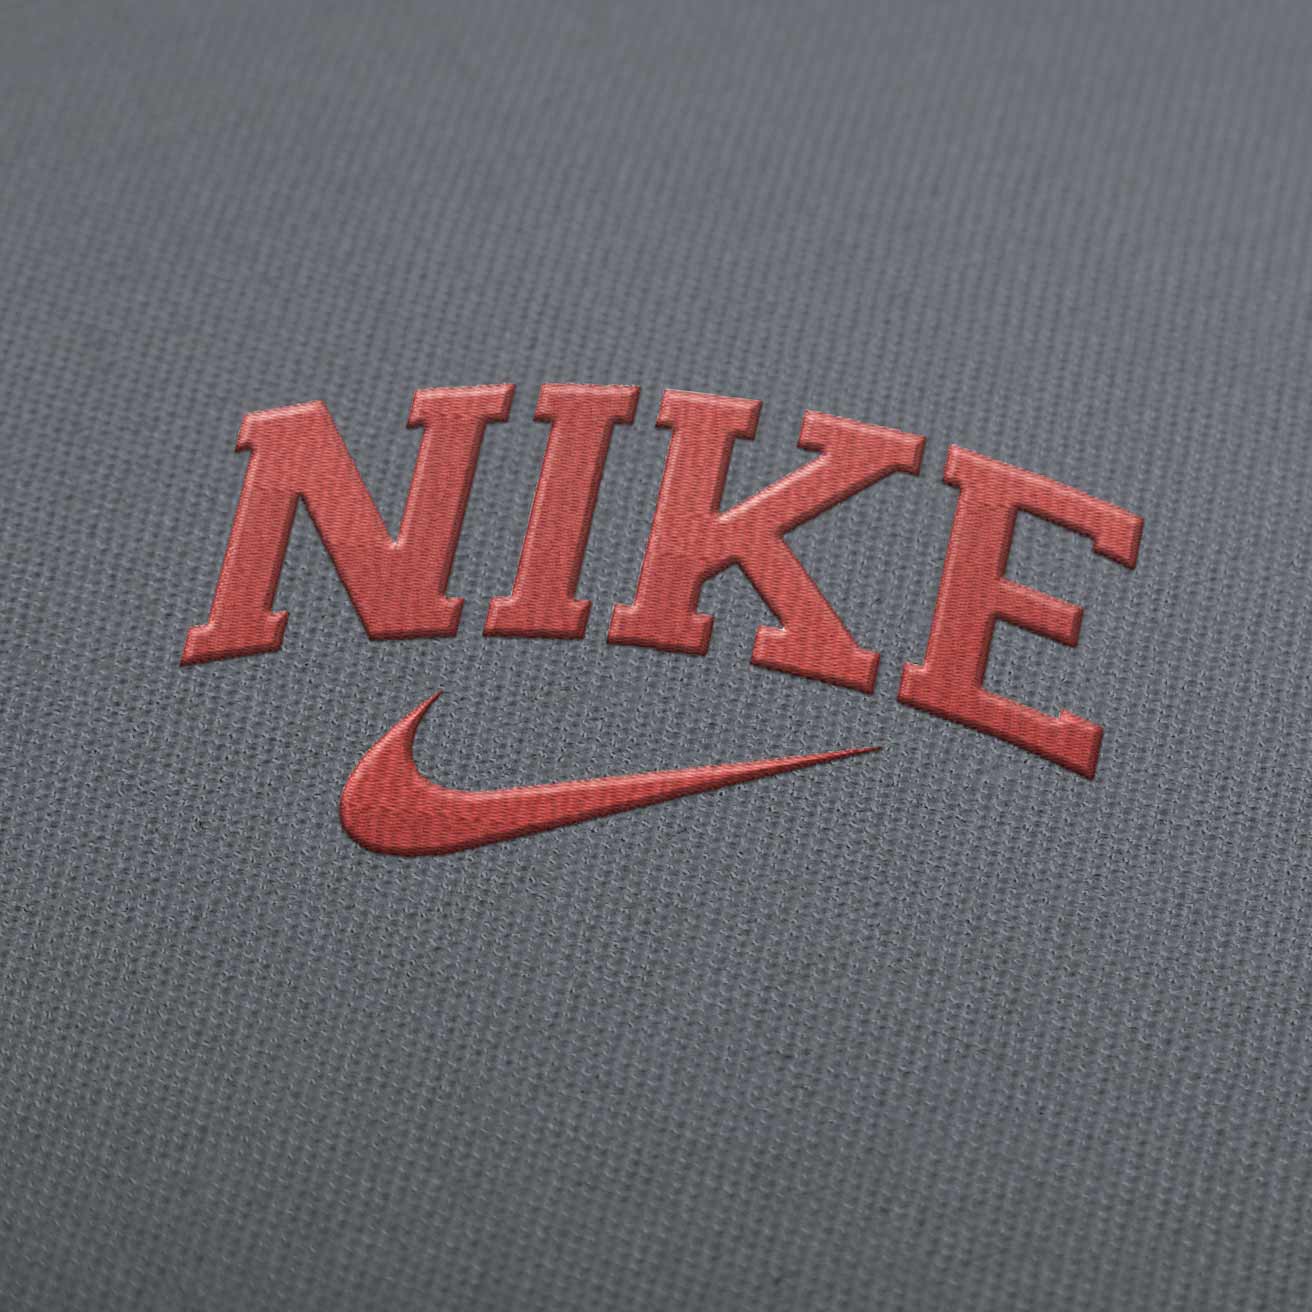 lanzadera Misterio enchufe Nike Old Logo Borderless Embroidery Design Download - EmbroideryDownload